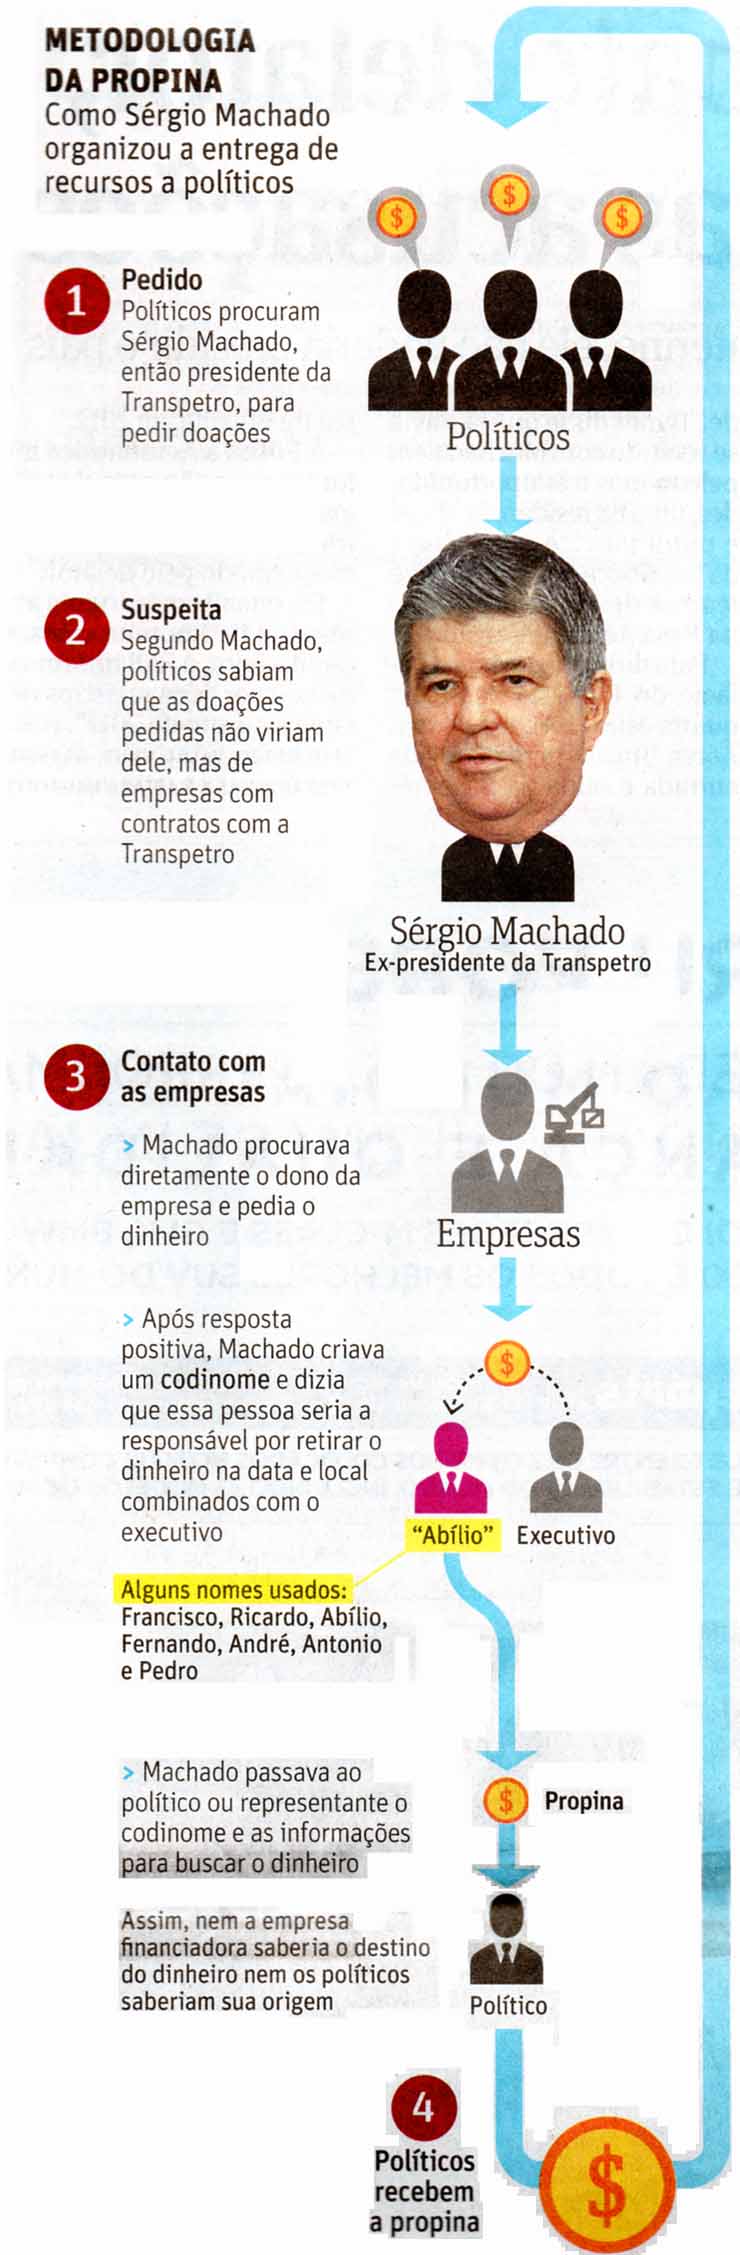 Srgio Machado: A metodologia da propina